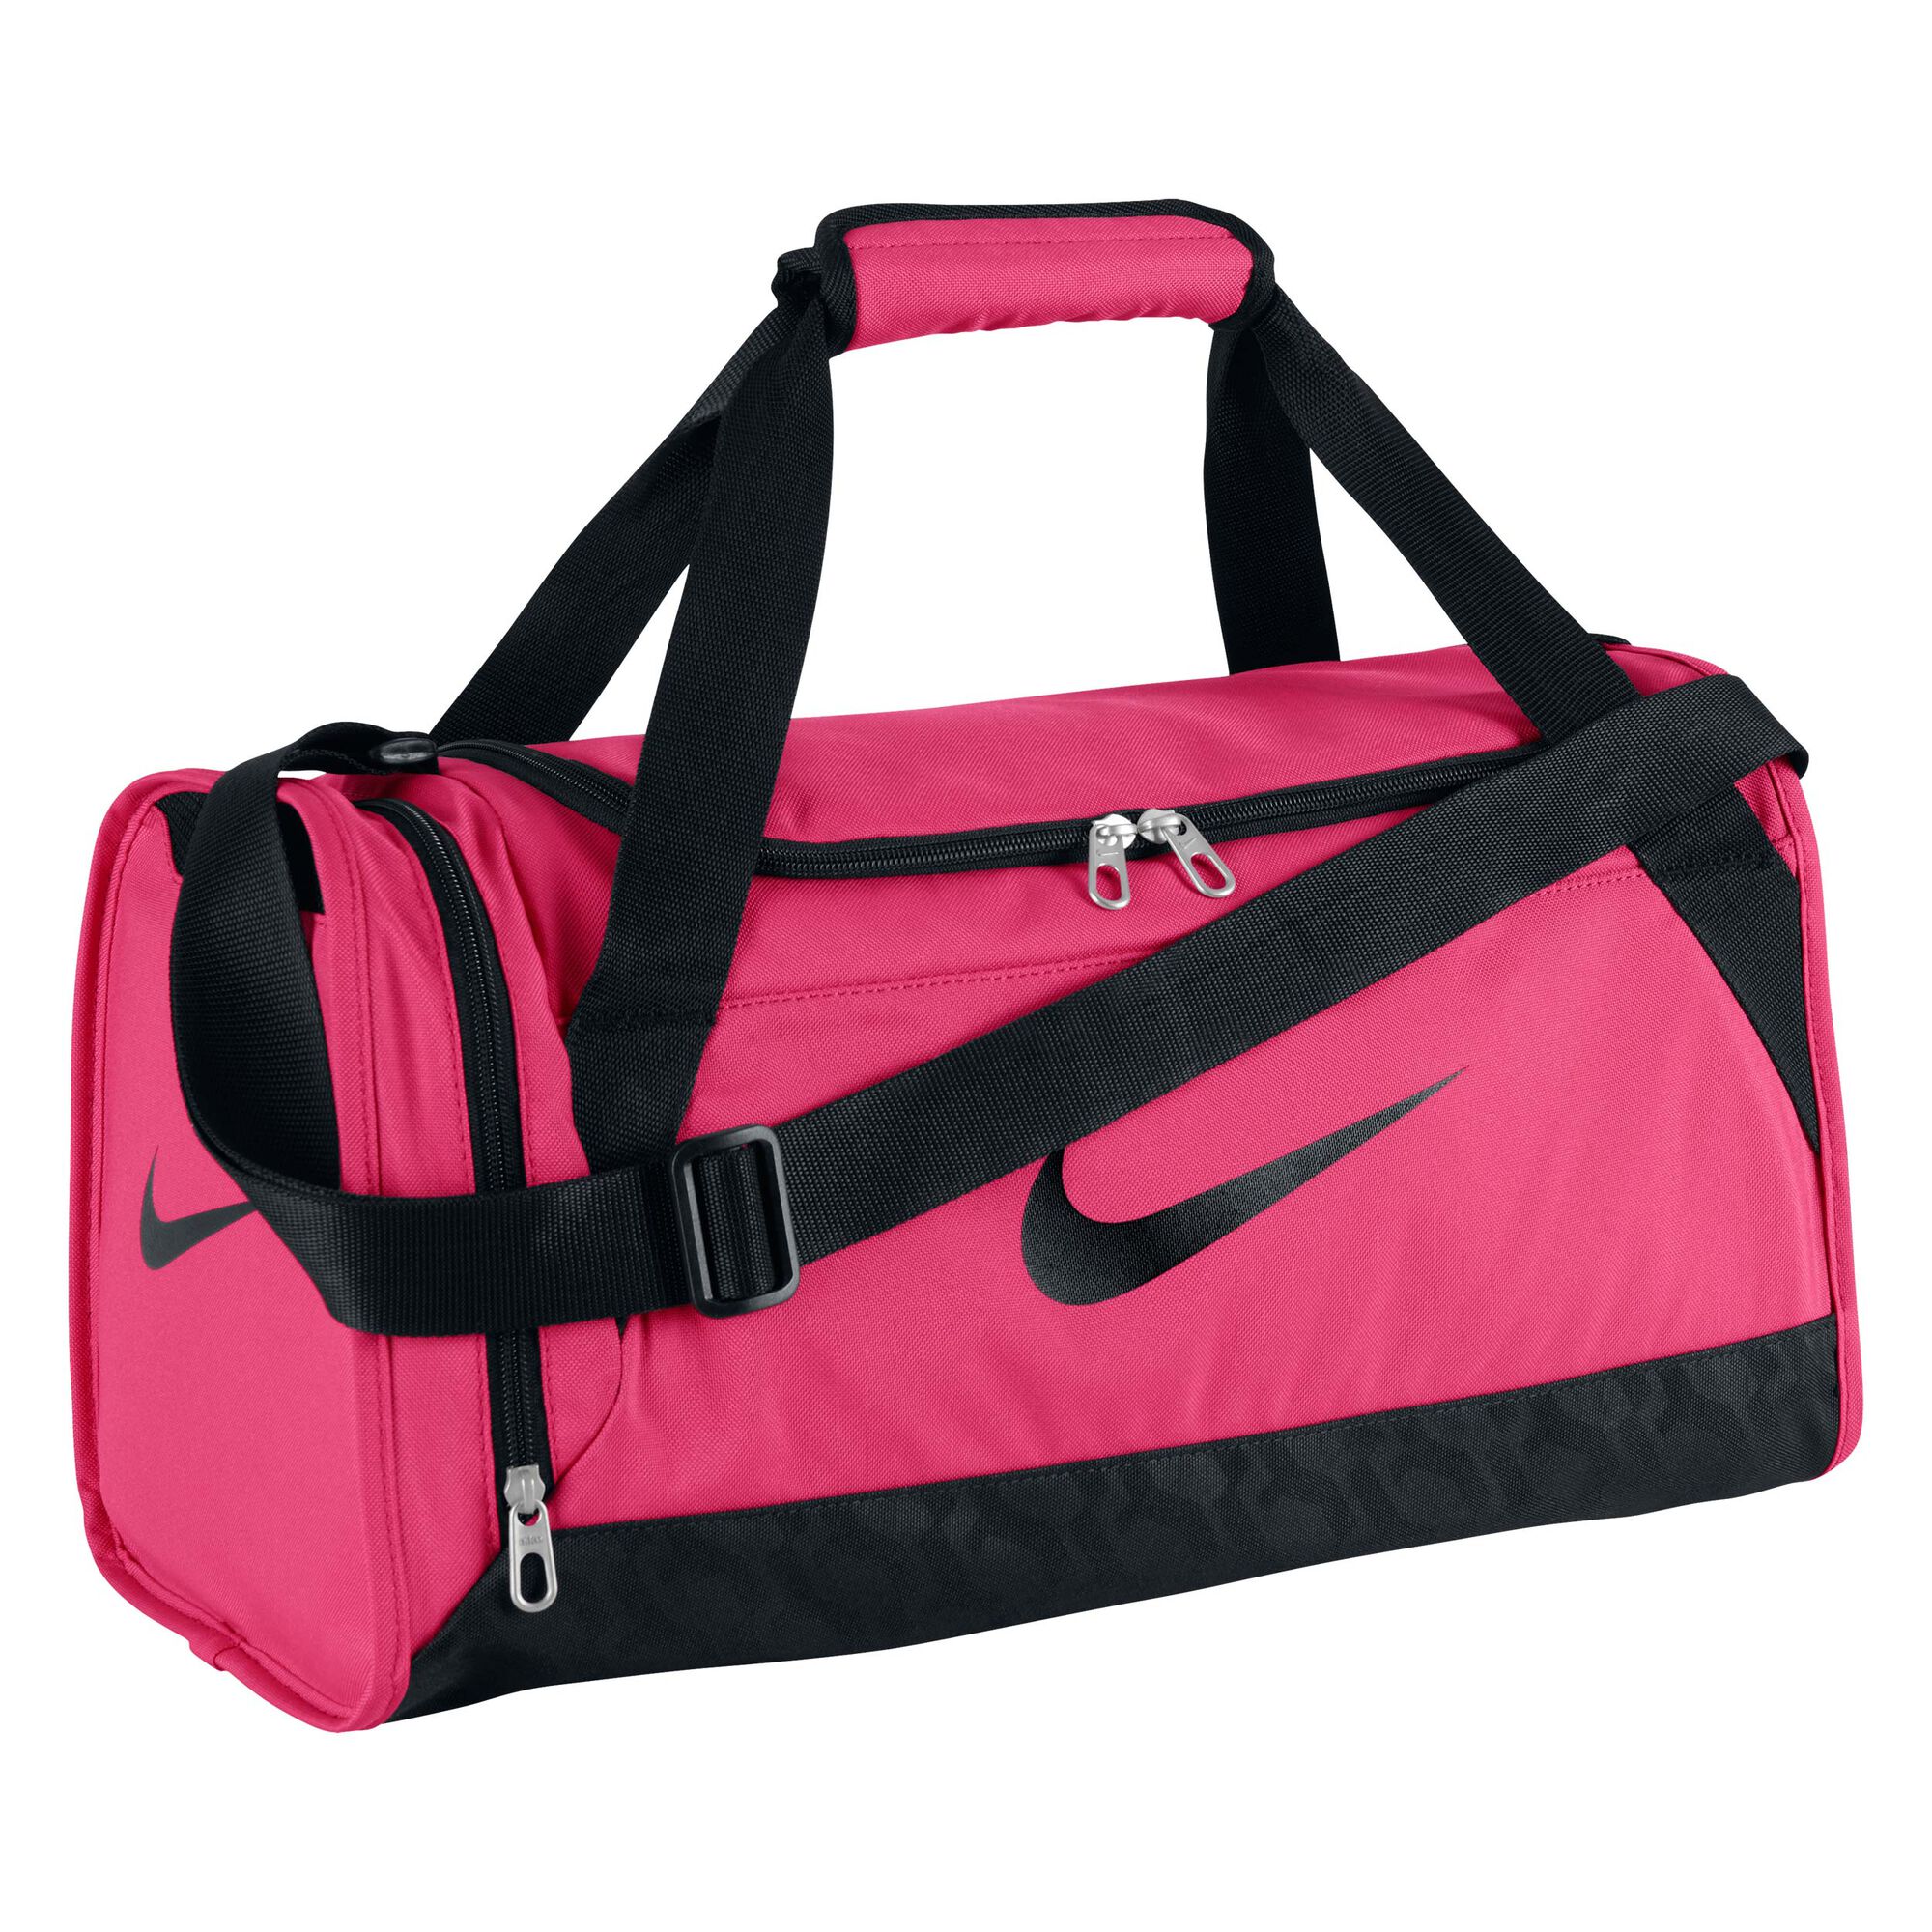 Buy Nike Brasilia Duffel XS Sports Bag Red, Black online